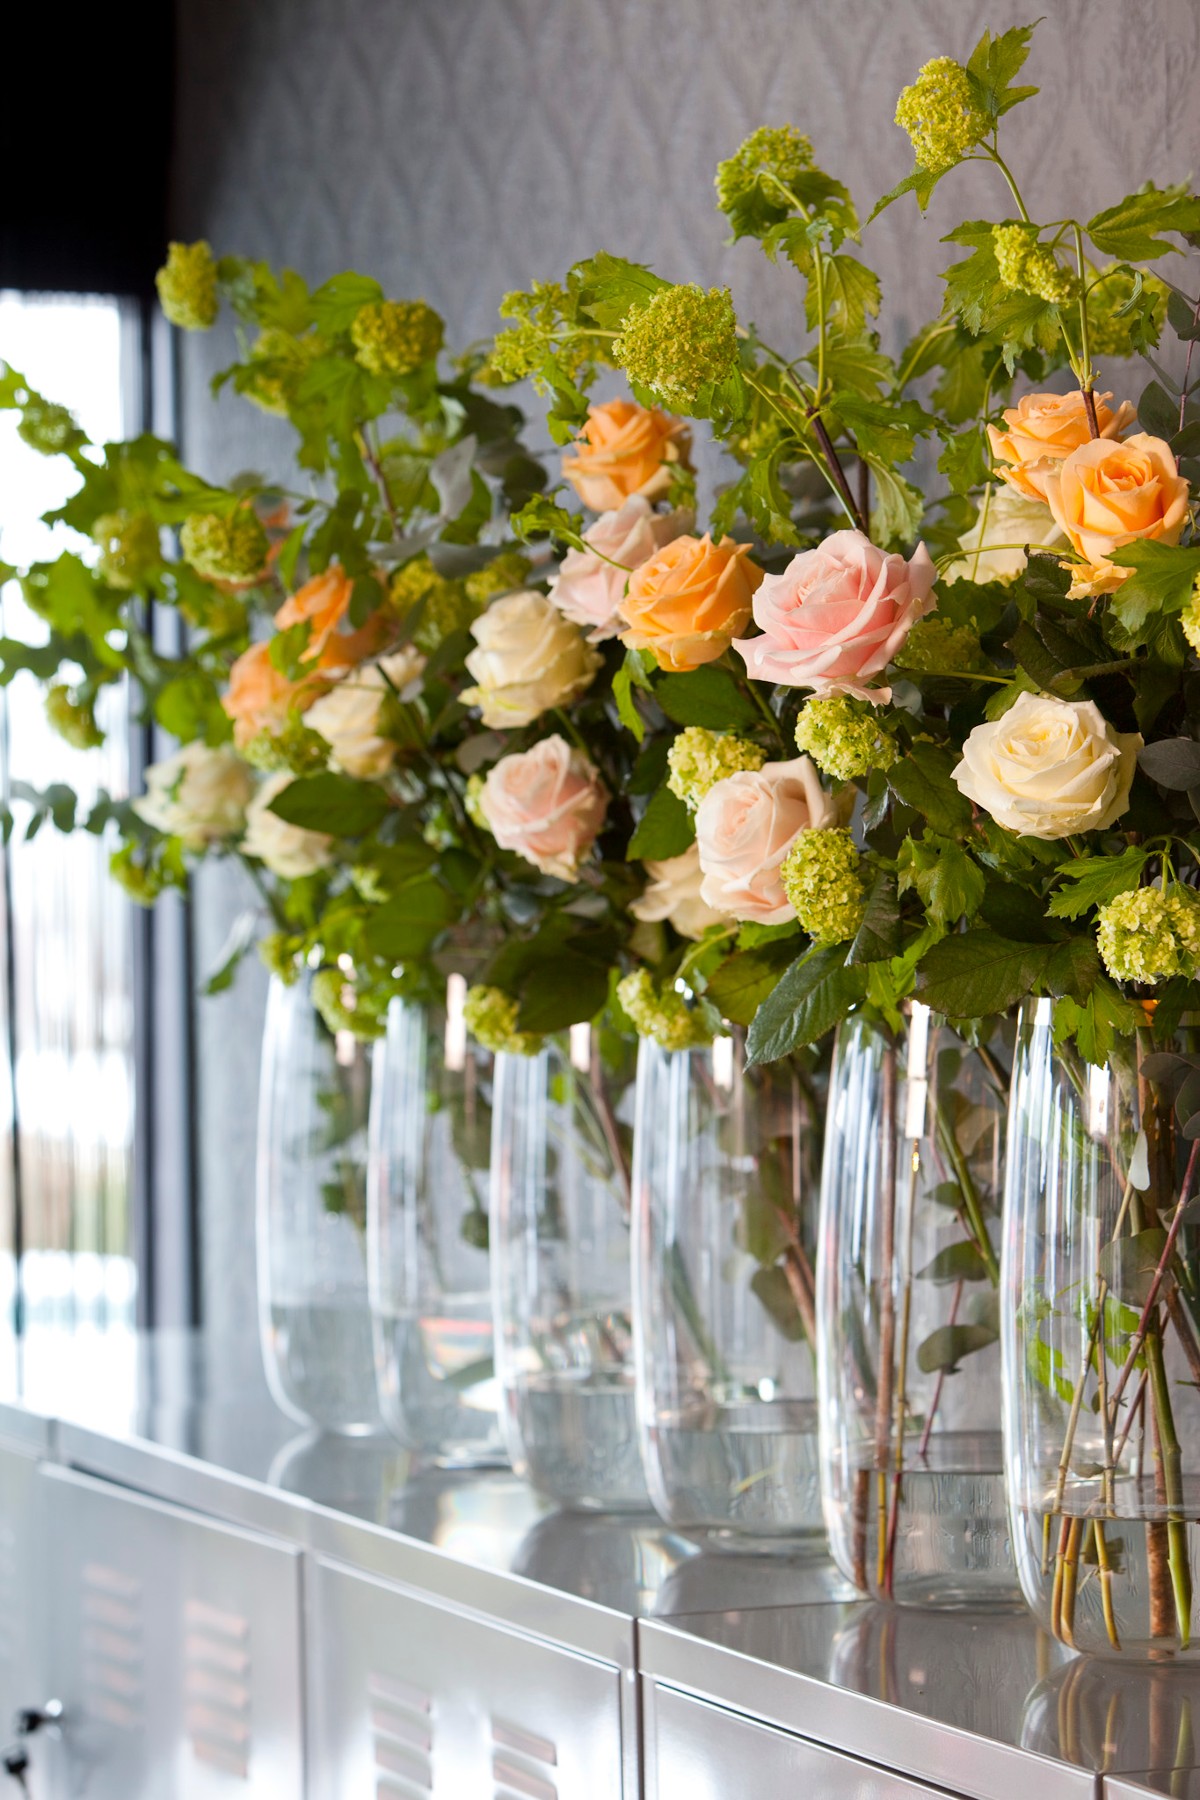 Условия для роз в вазе. Цветы в вазах. Цветочная композиция в вазе. Цветы в прозрачной вазе. Цветы в прозрачных вазах.